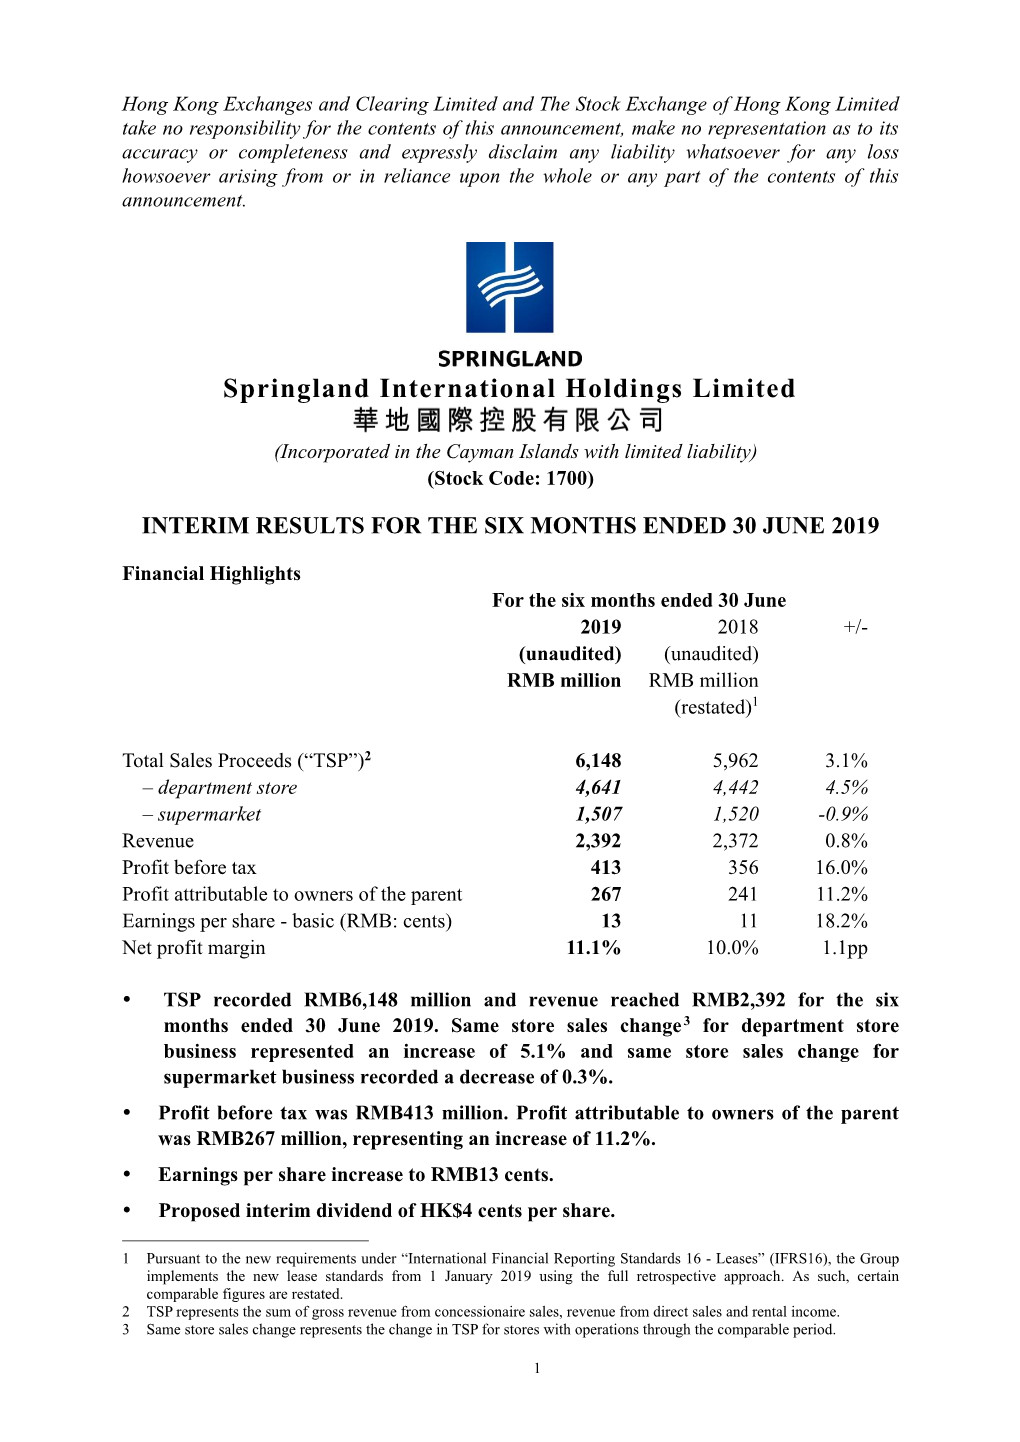 Springland International Holdings Limited